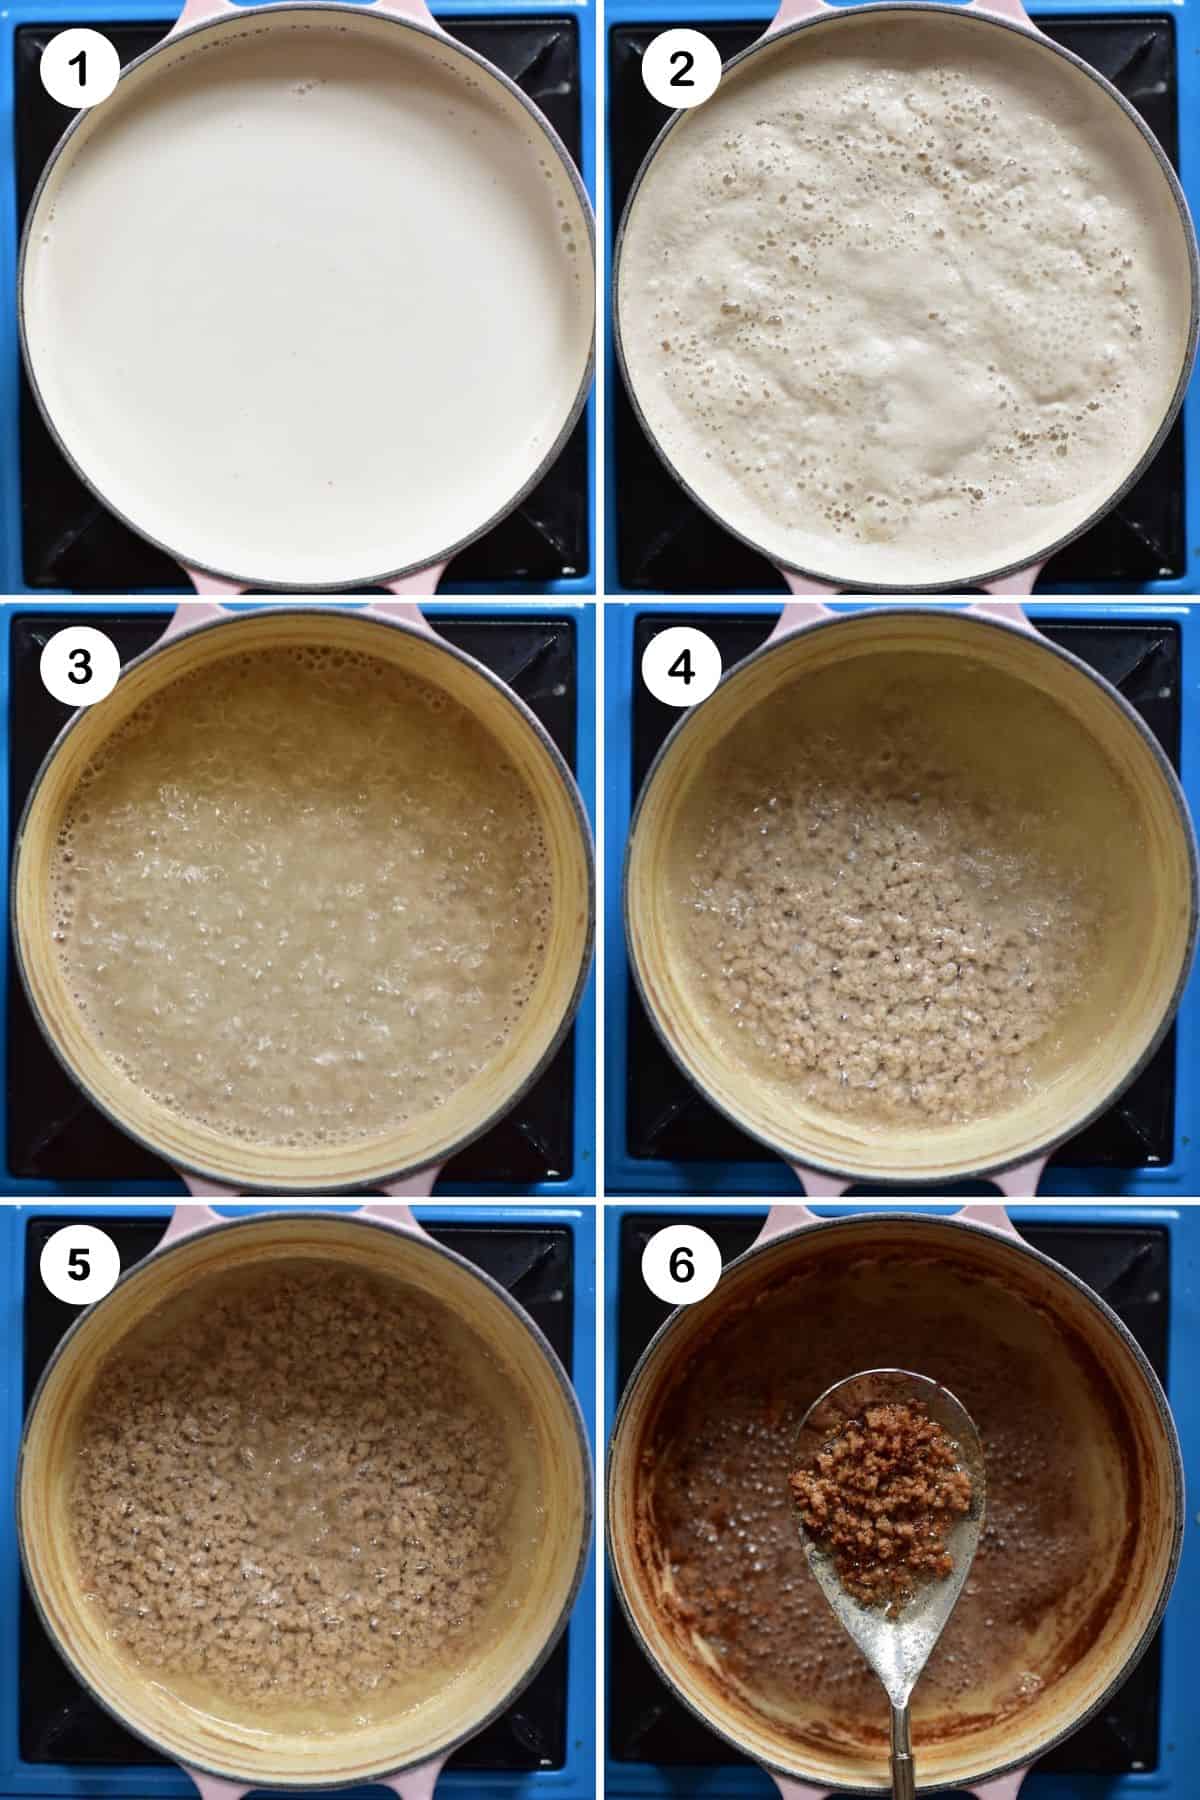 Steps for boiling coconut milk